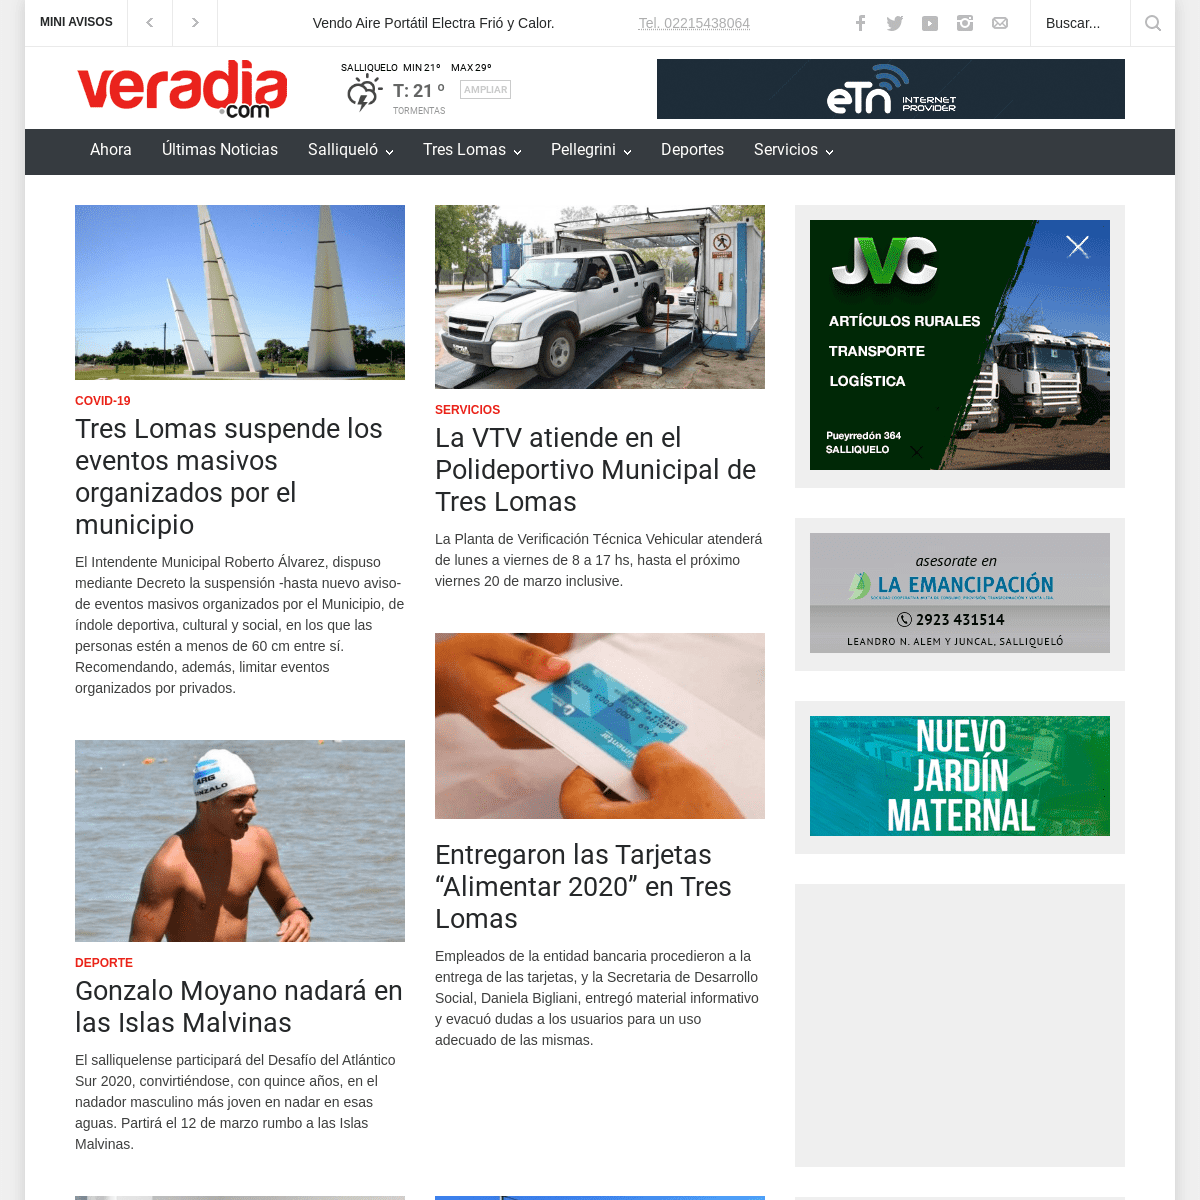 A complete backup of veradia.com